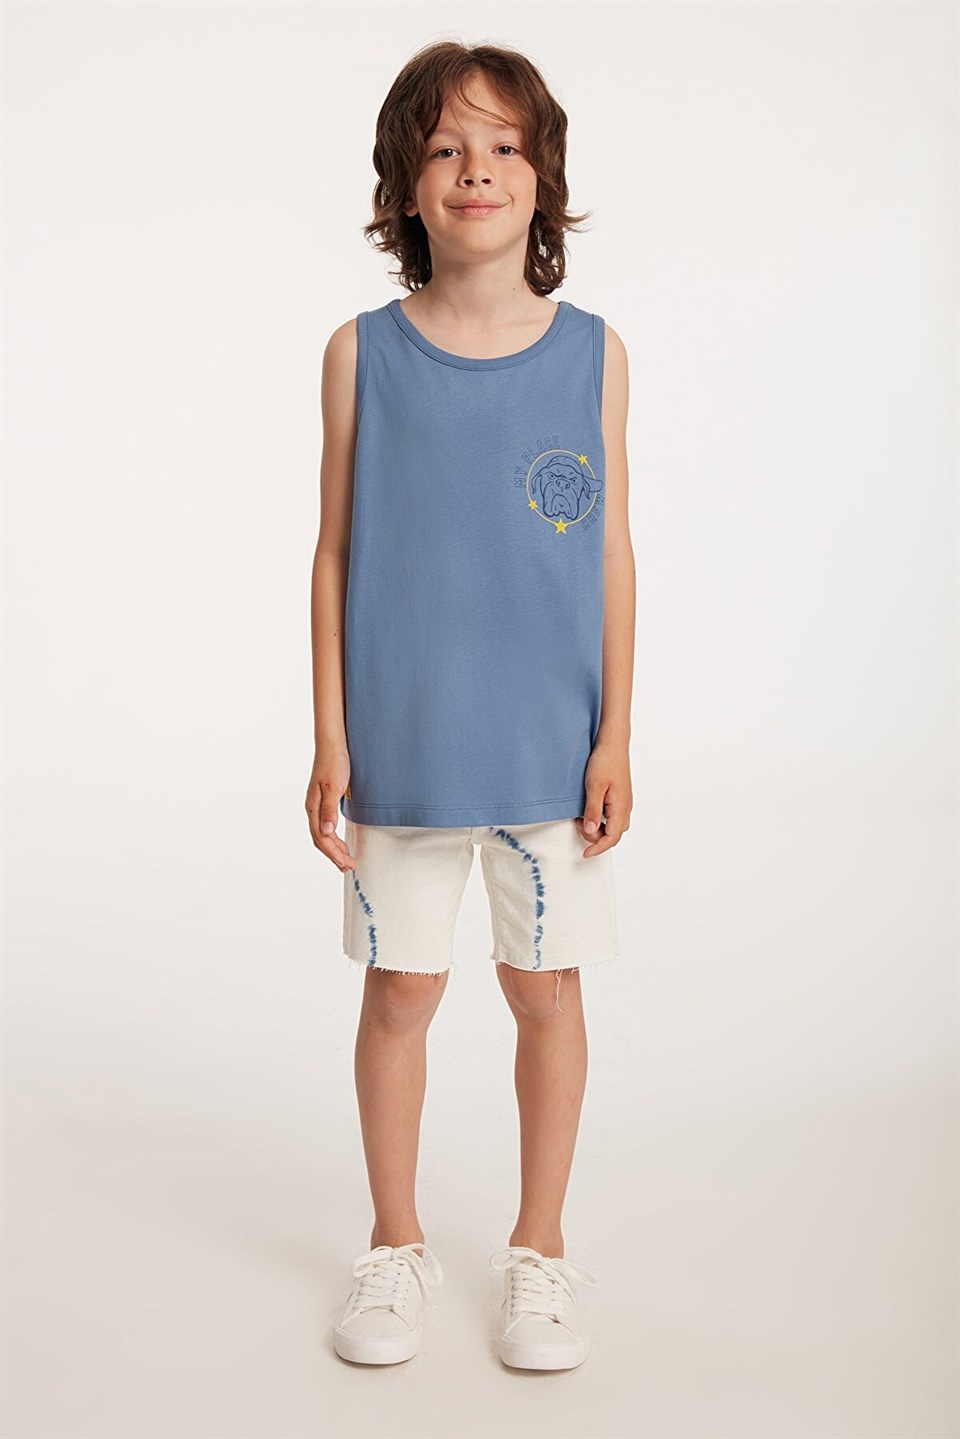 BULLDOG Çocuk Mavi Baskılı Yuvarlak Yaka Comfort Fit T-Shirt